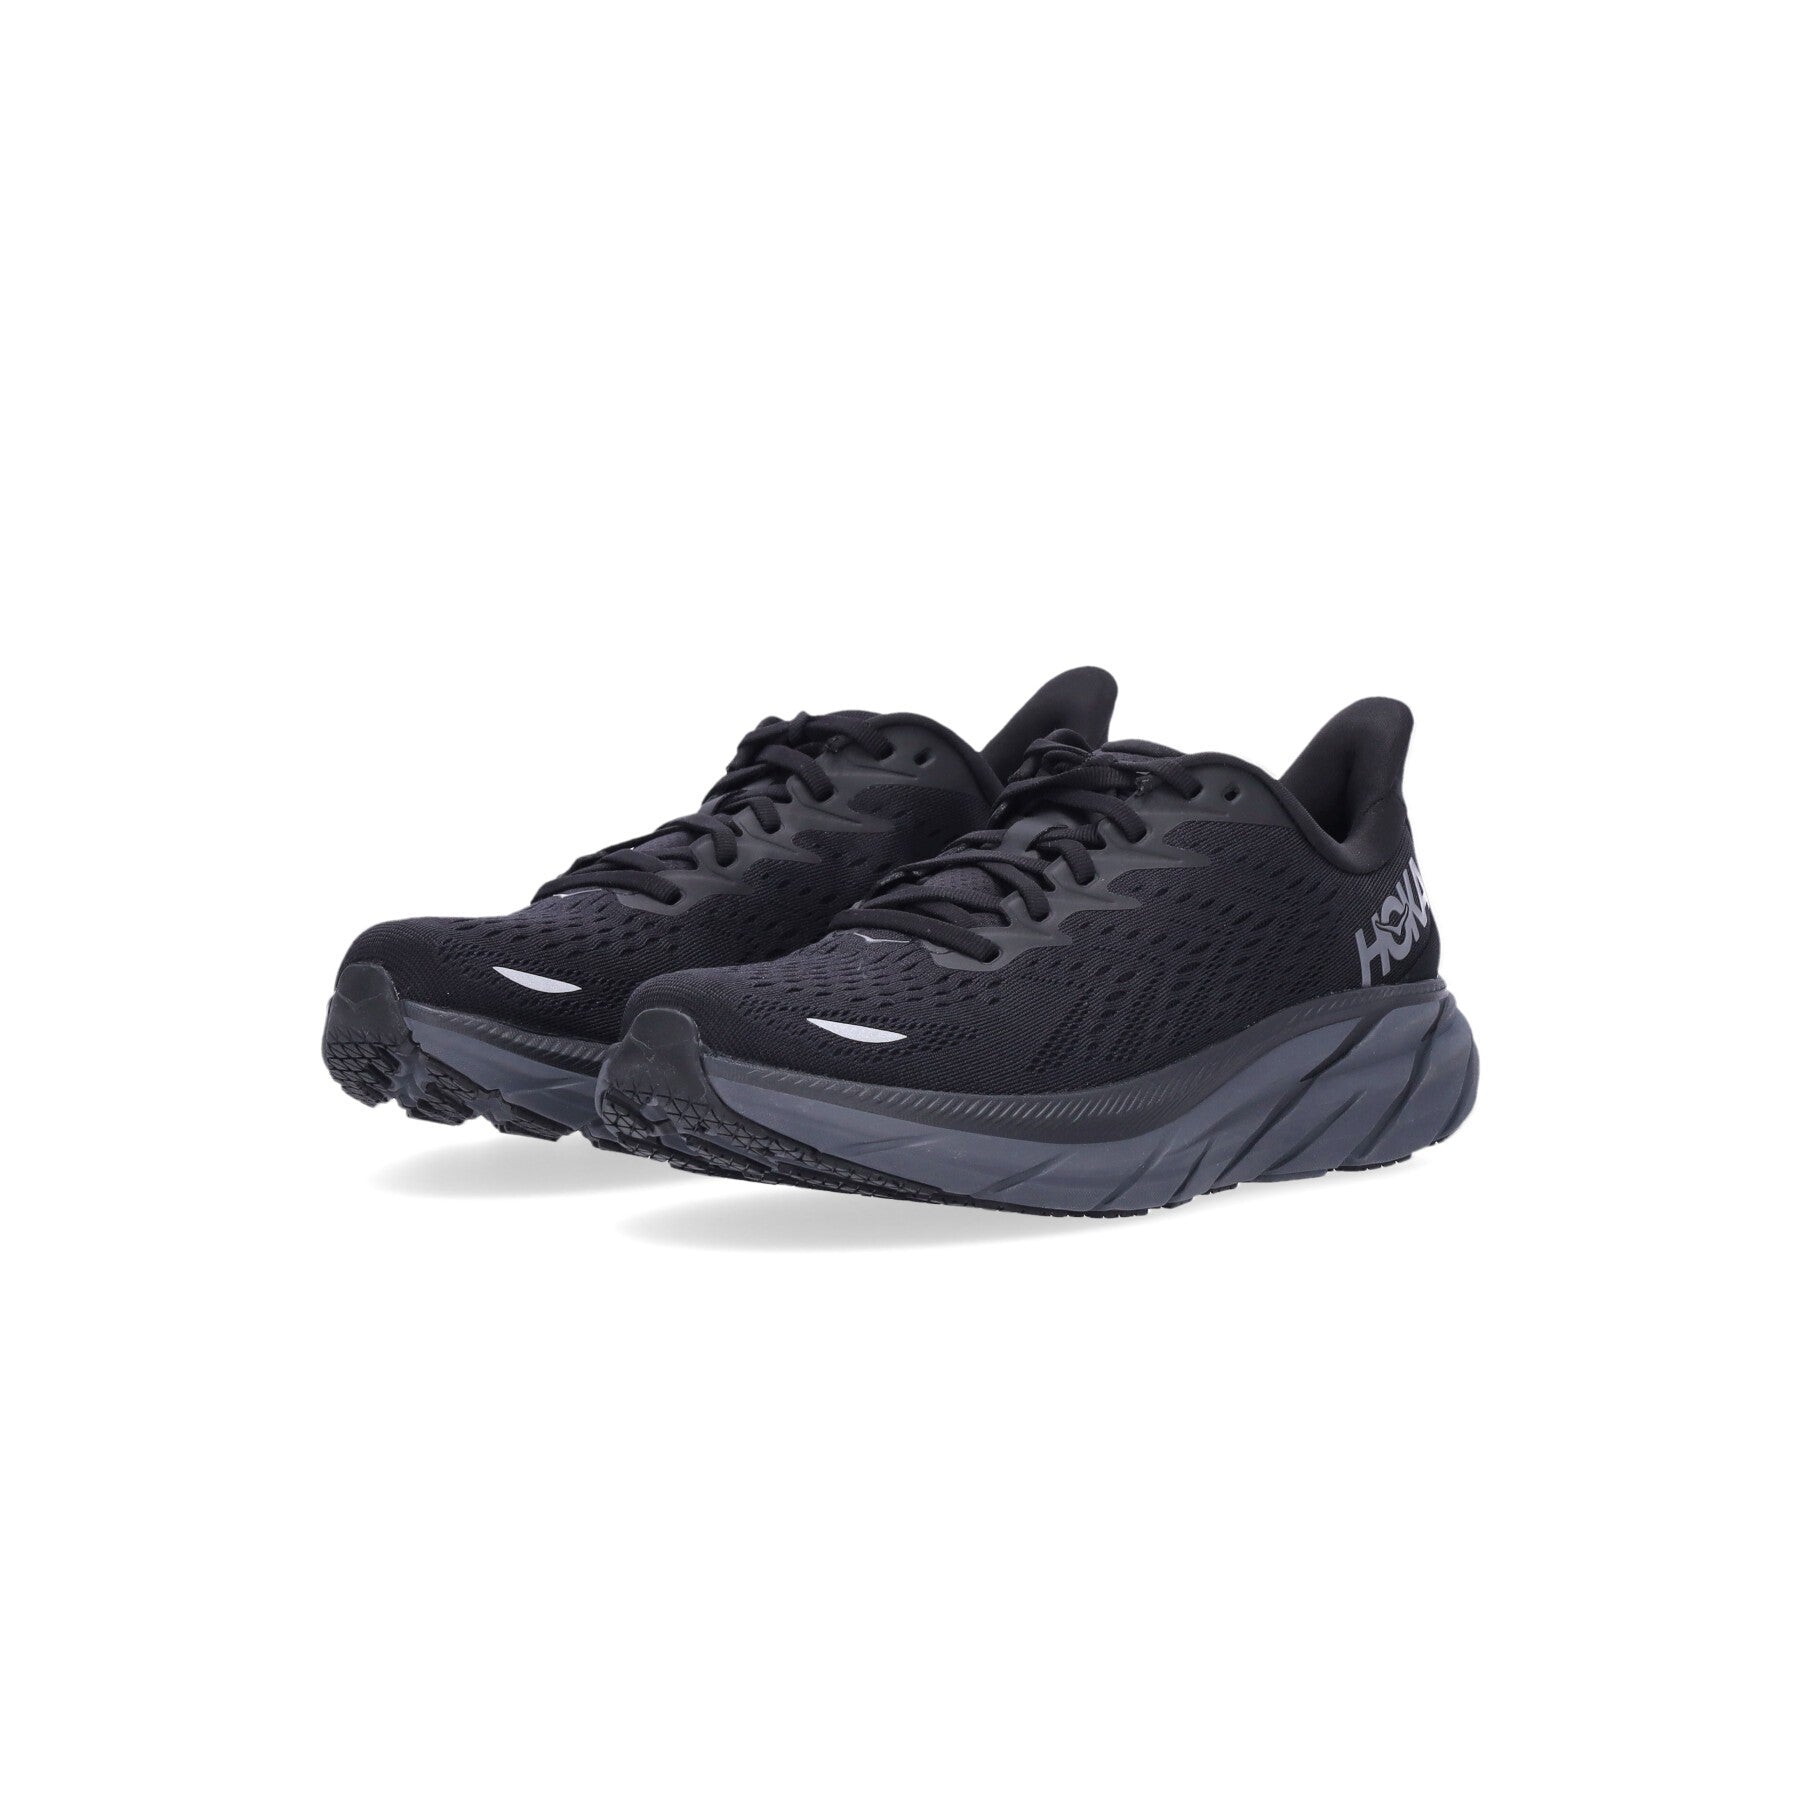 Clifton 8 Black/black Men's Outdoor Shoe